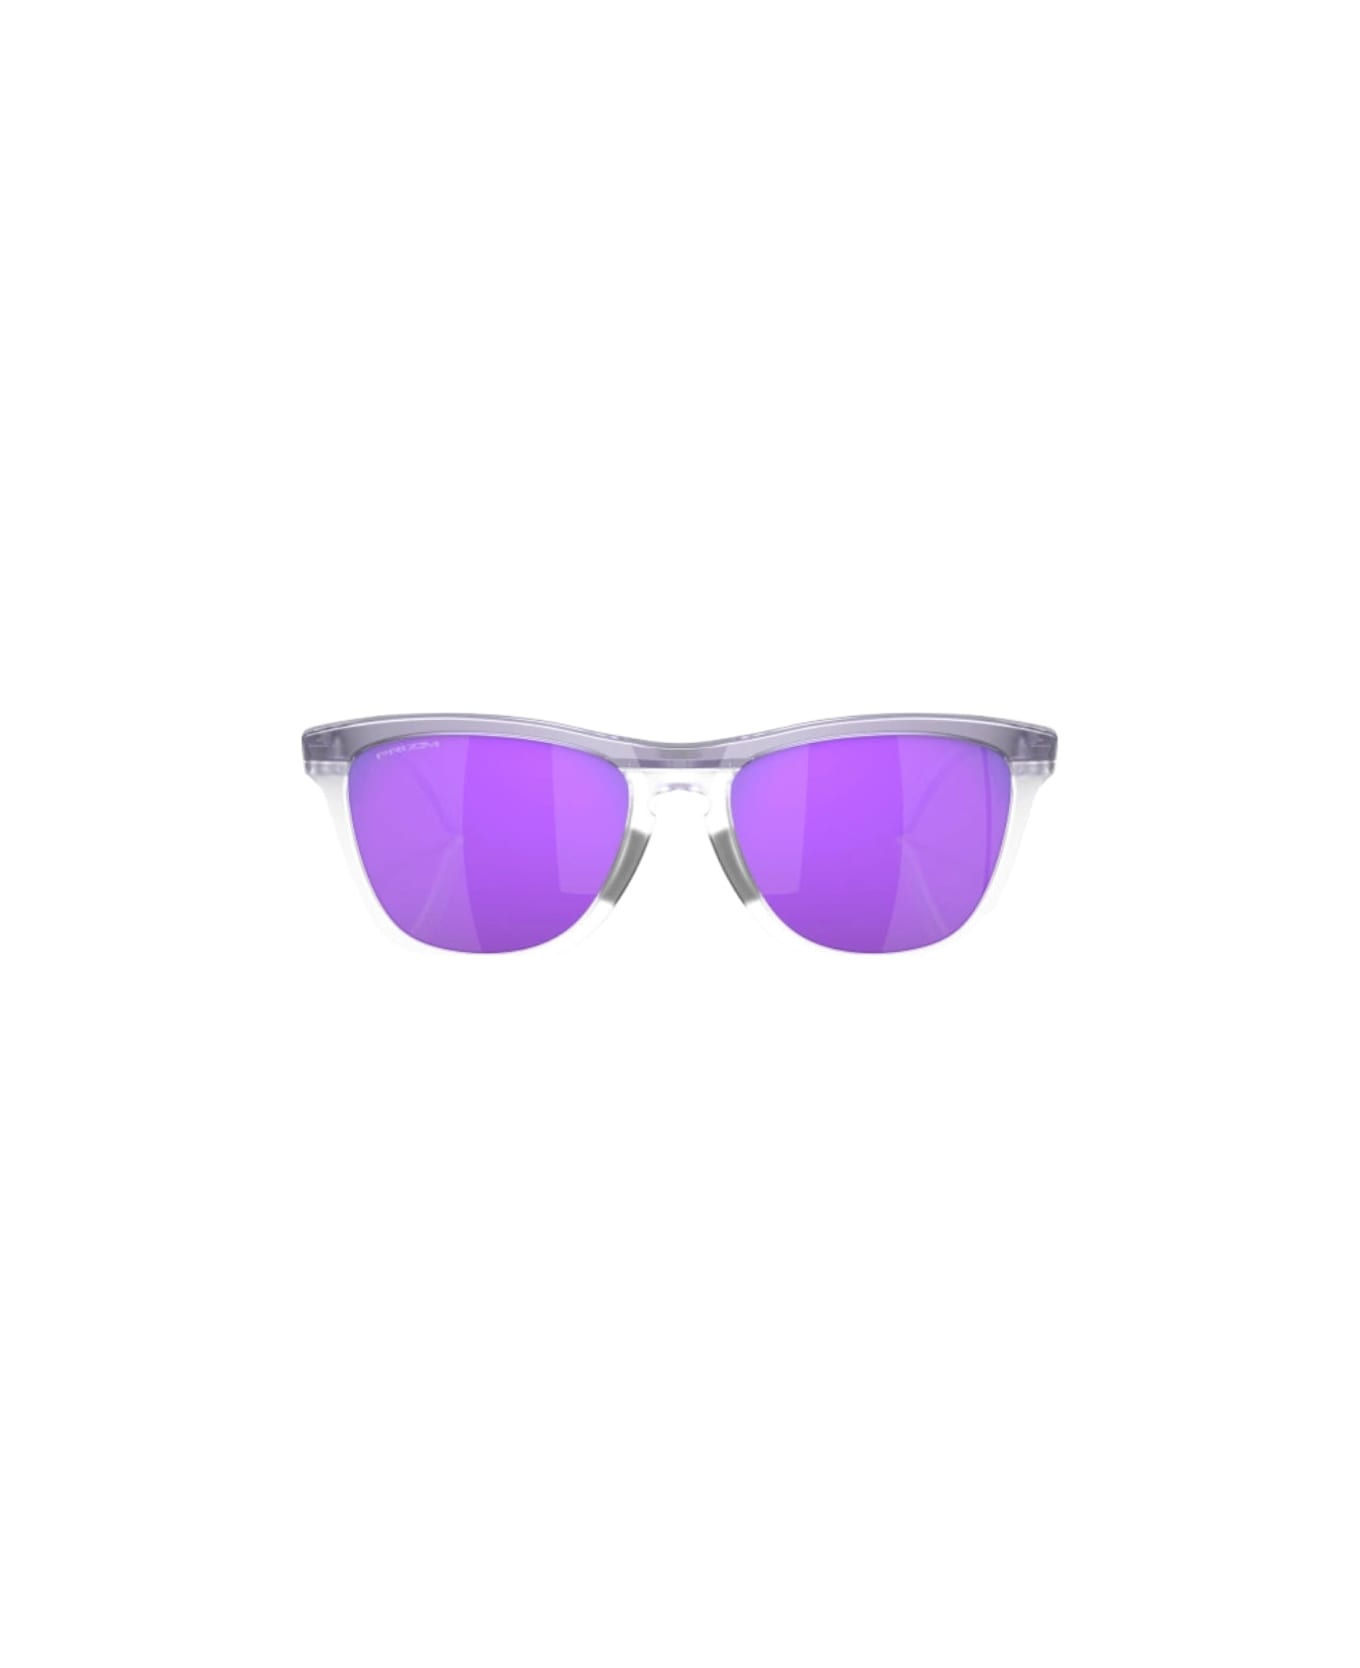 Oakley Frogskins Hybrid - 9289 Sunglasses